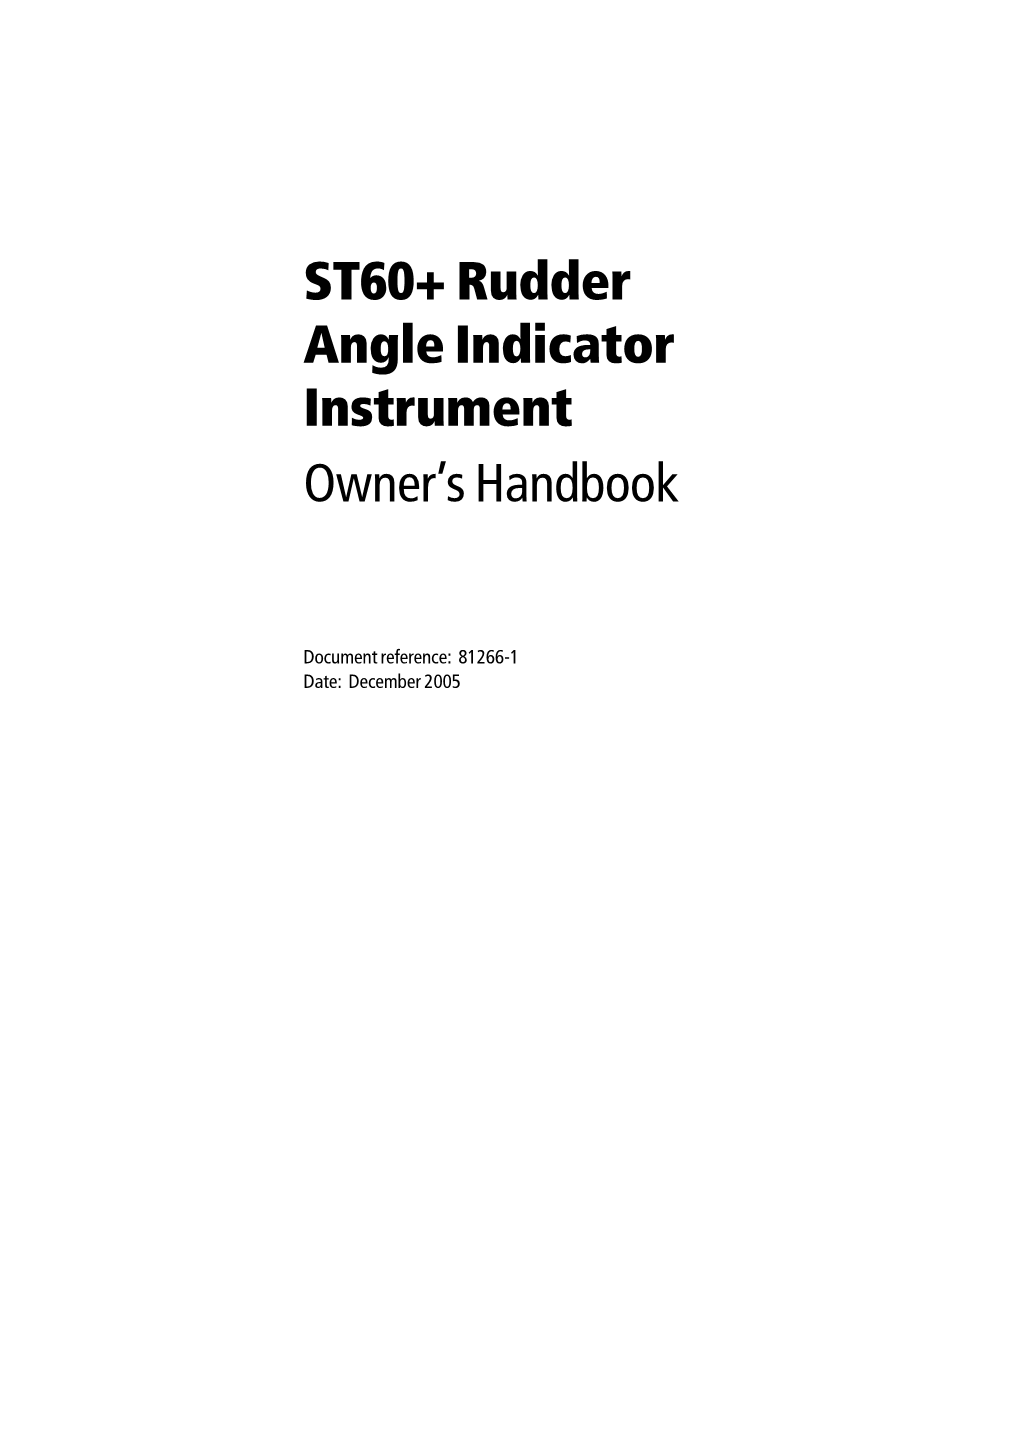 ST60+ Rudder Angle Indicator Instrument Owner's Handbook